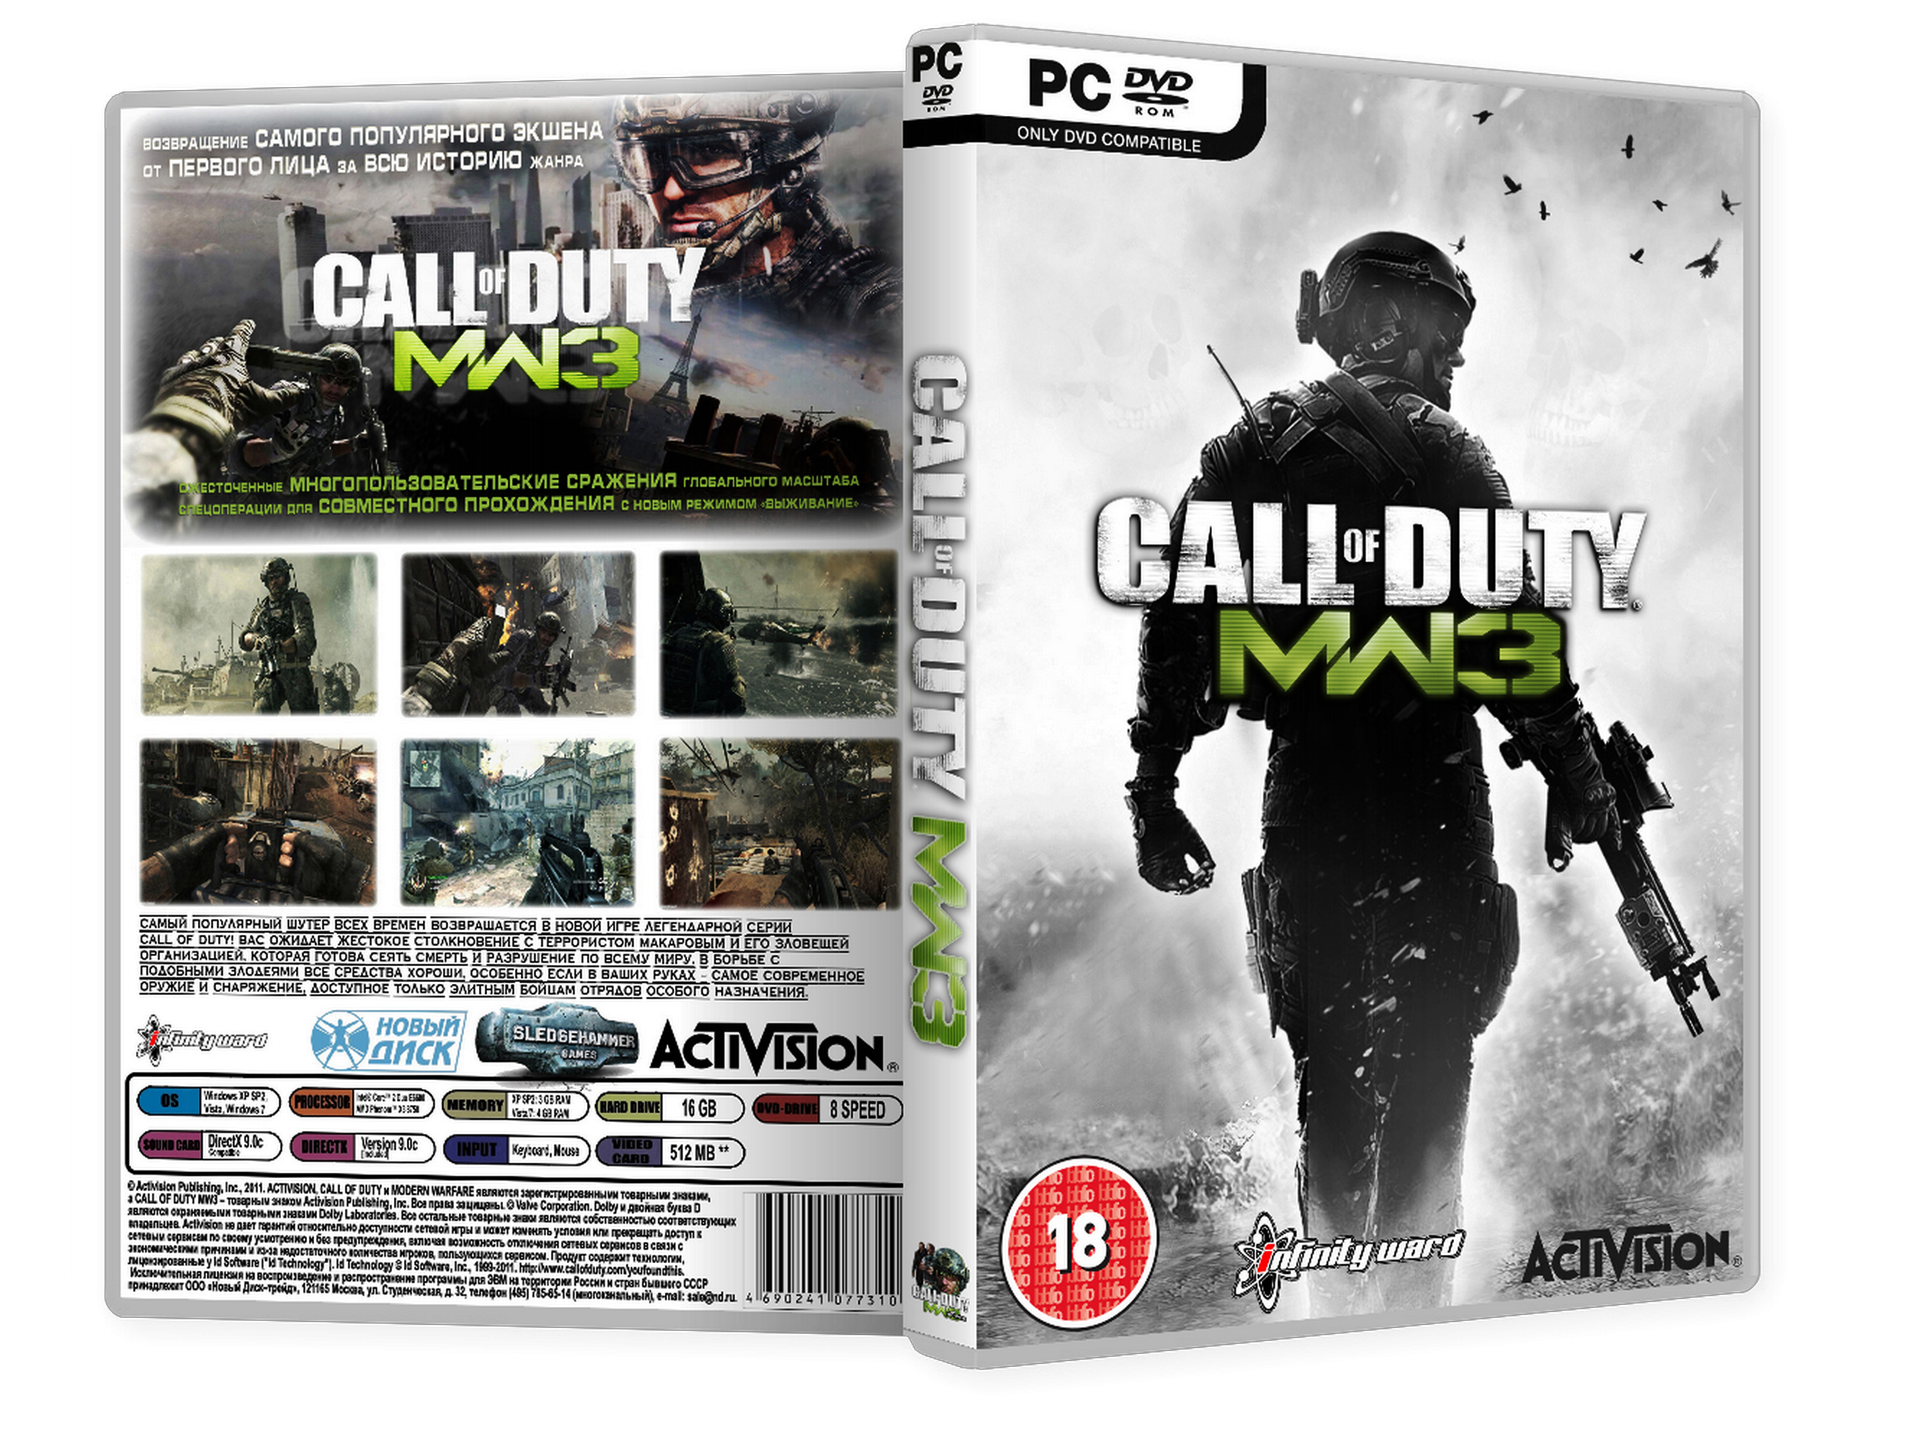 Call of Duty Modern Warfare 3 PC Box Art Cover by fergana16